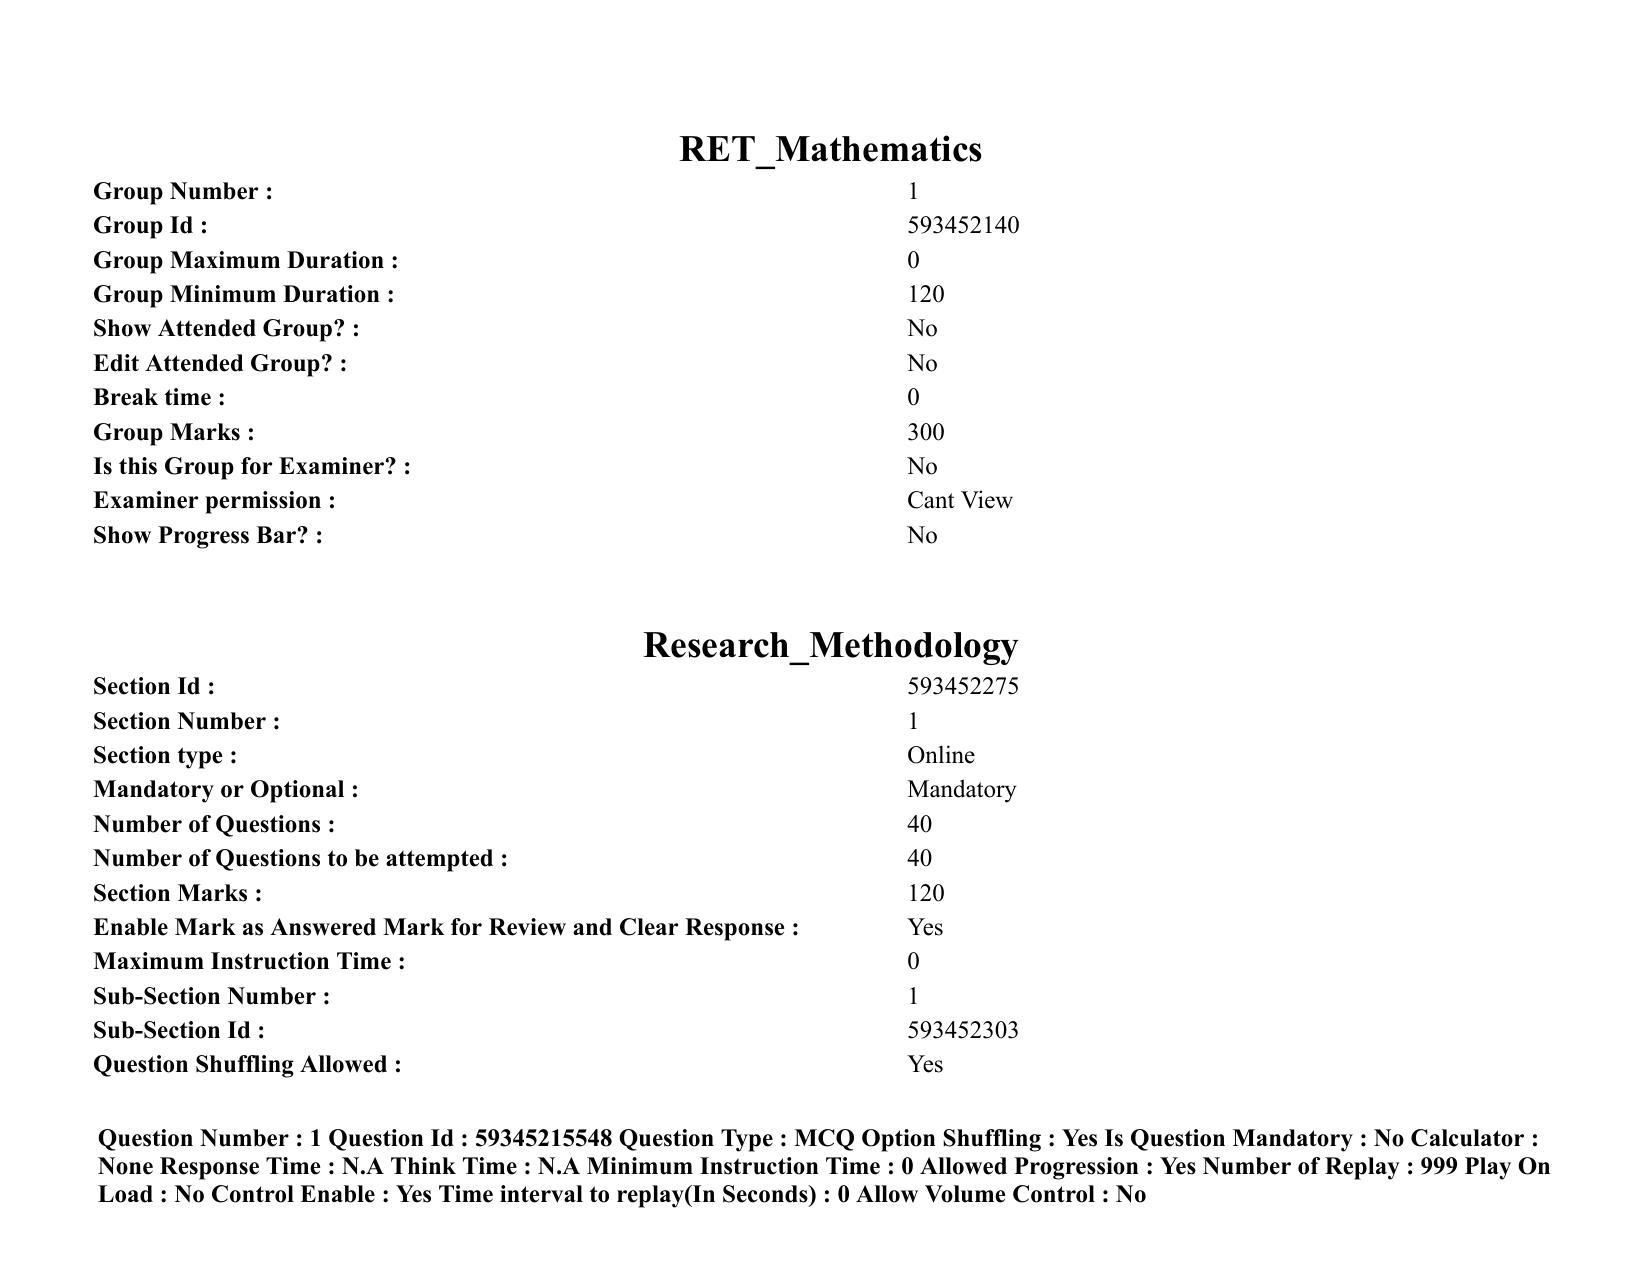 BHU RET Mathematics 2021 Question Pape - Page 2